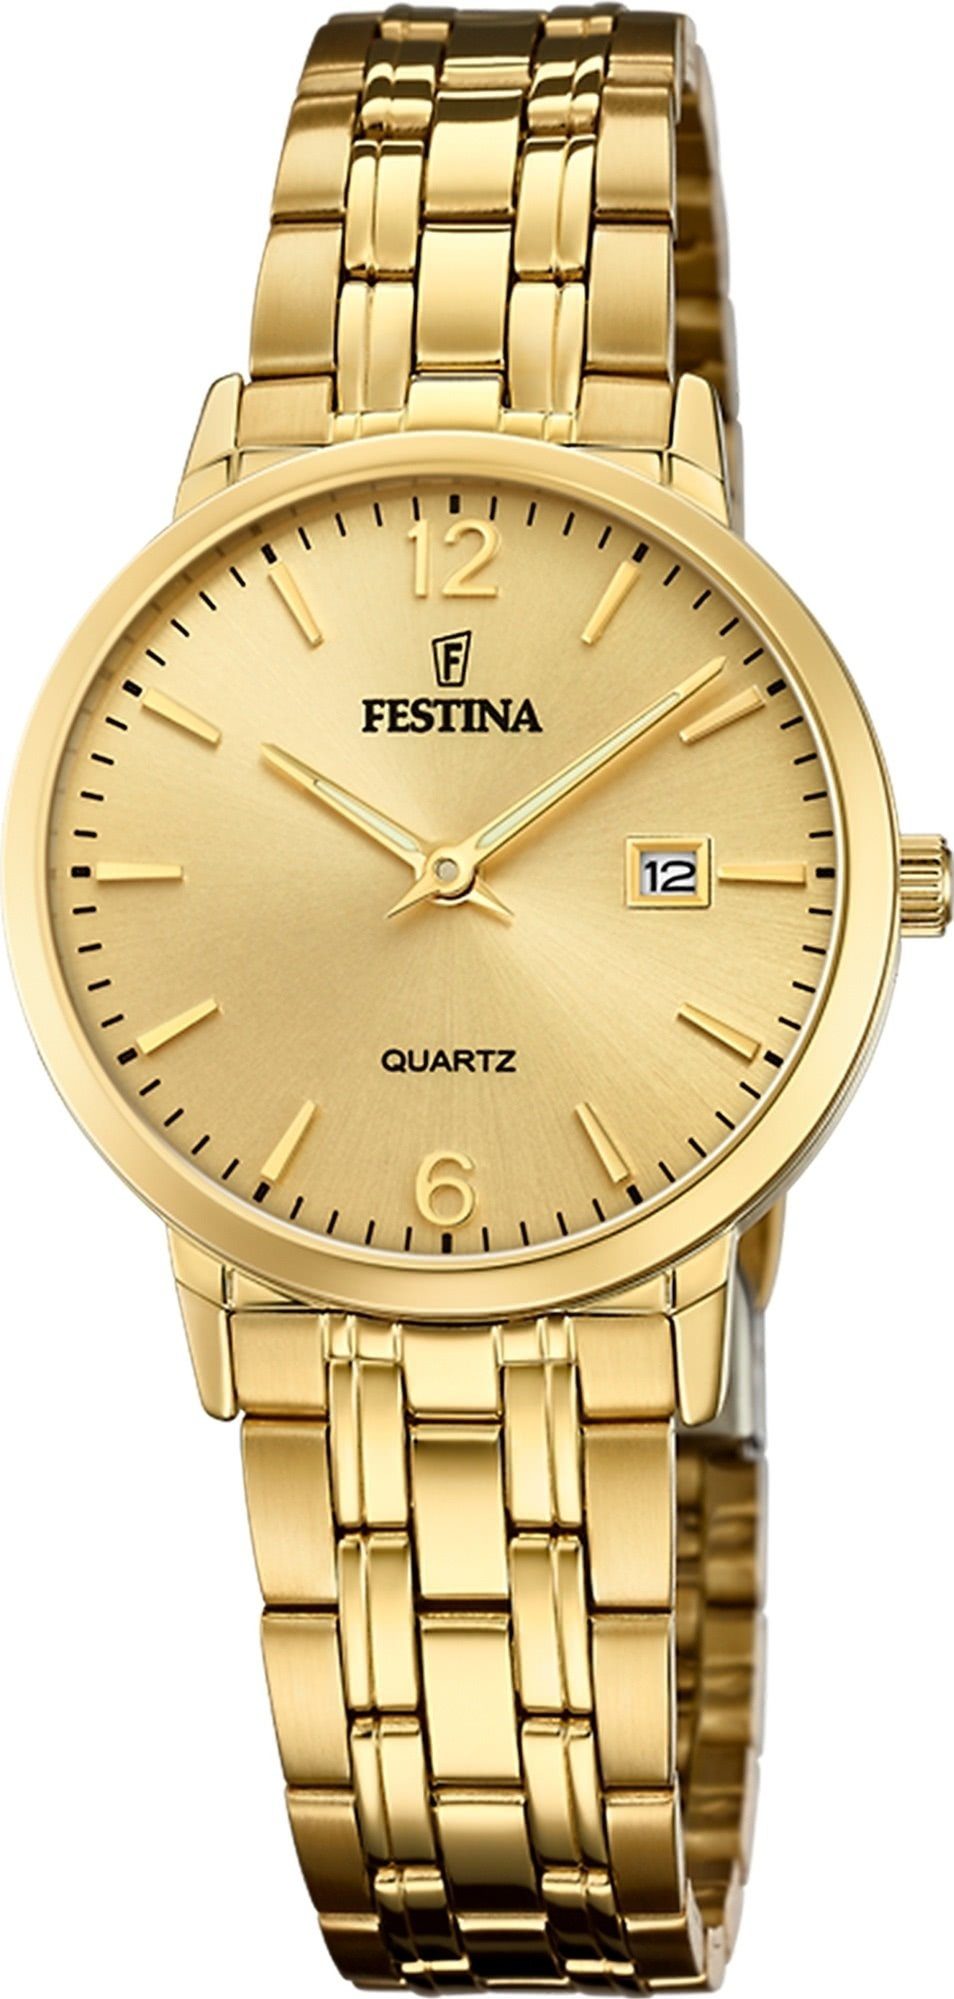 gold, Elegant Armbanduhr Quarzuhr Elegant Damen Festina F20514/3 Festina Damen Stahl, rund, Edelstahlarmband Uhr